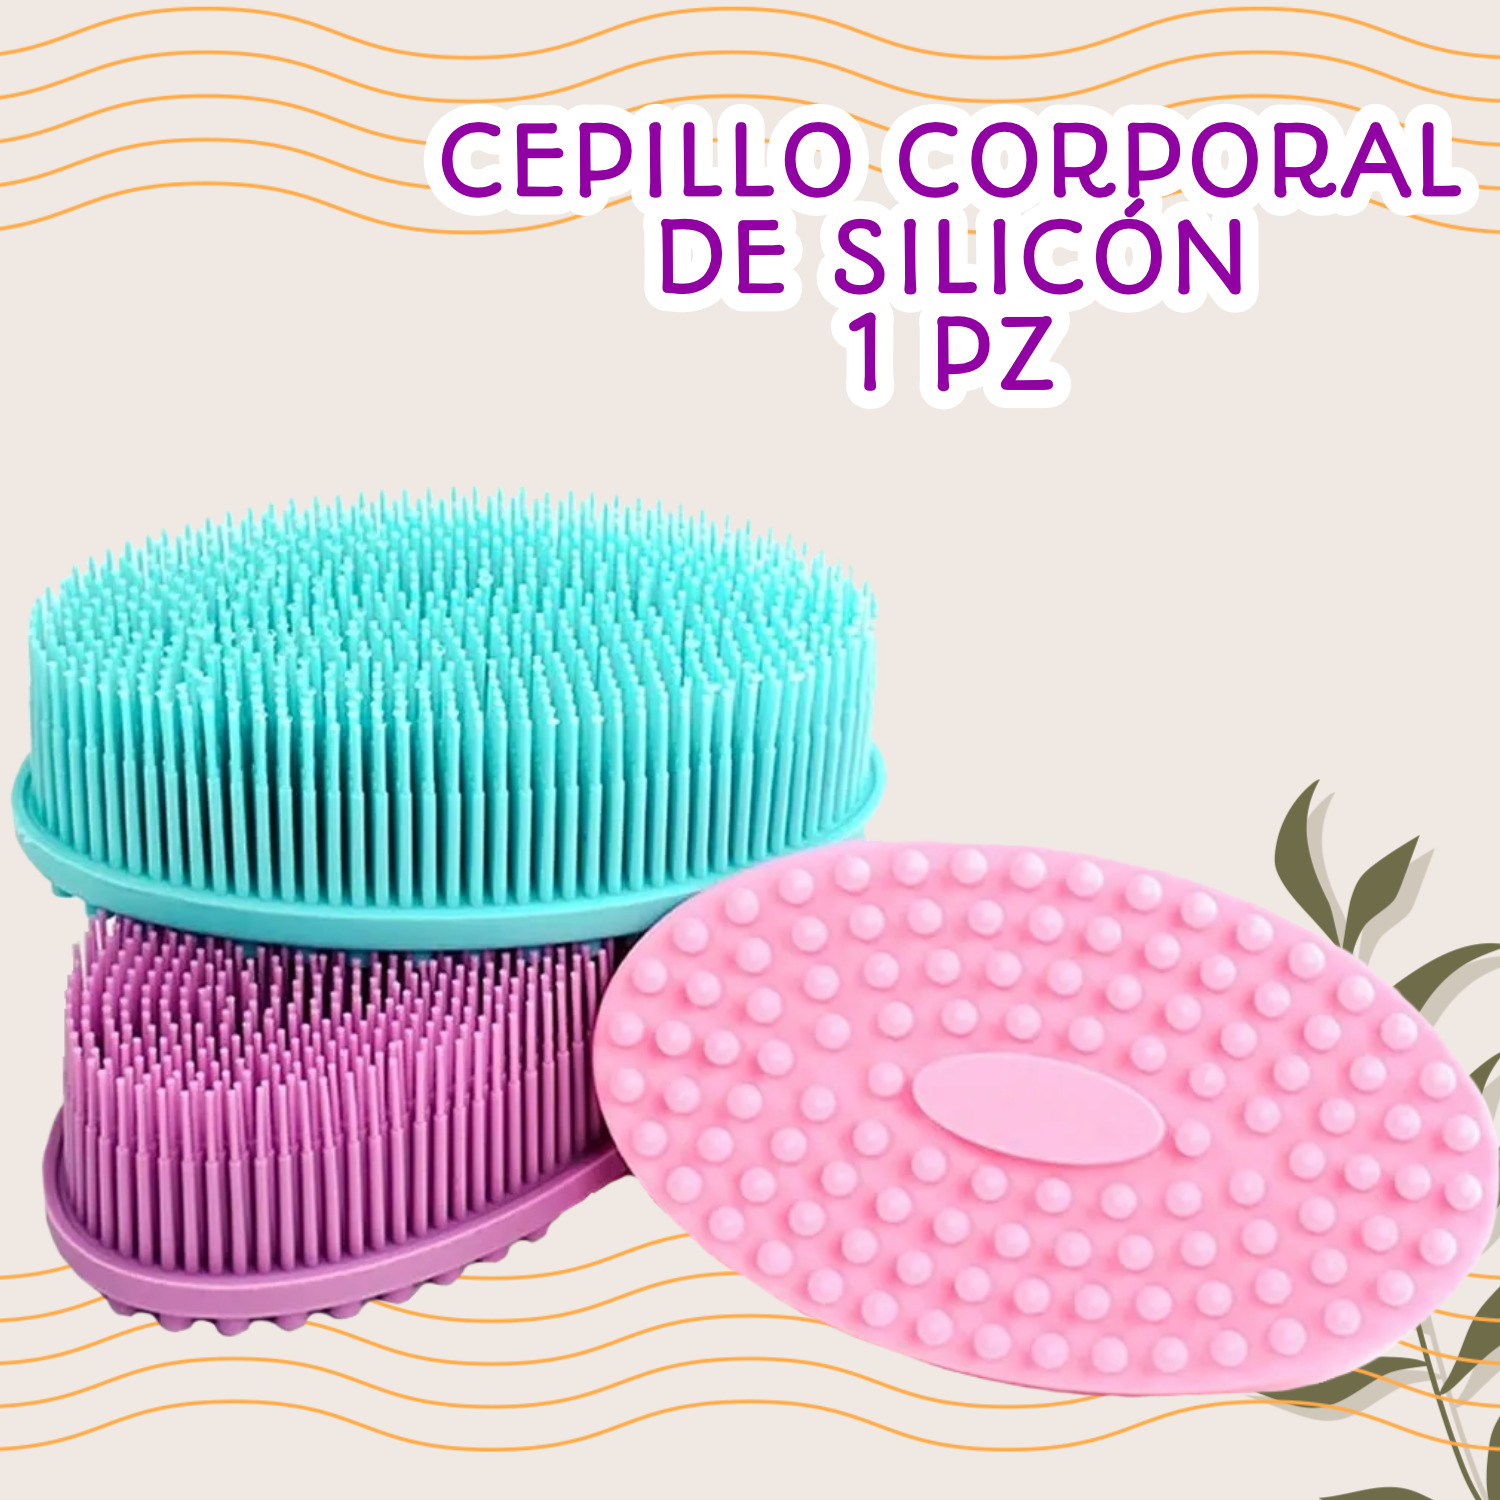 1pz Cepillo Corporal De Silicon Portátil Texturas Suave